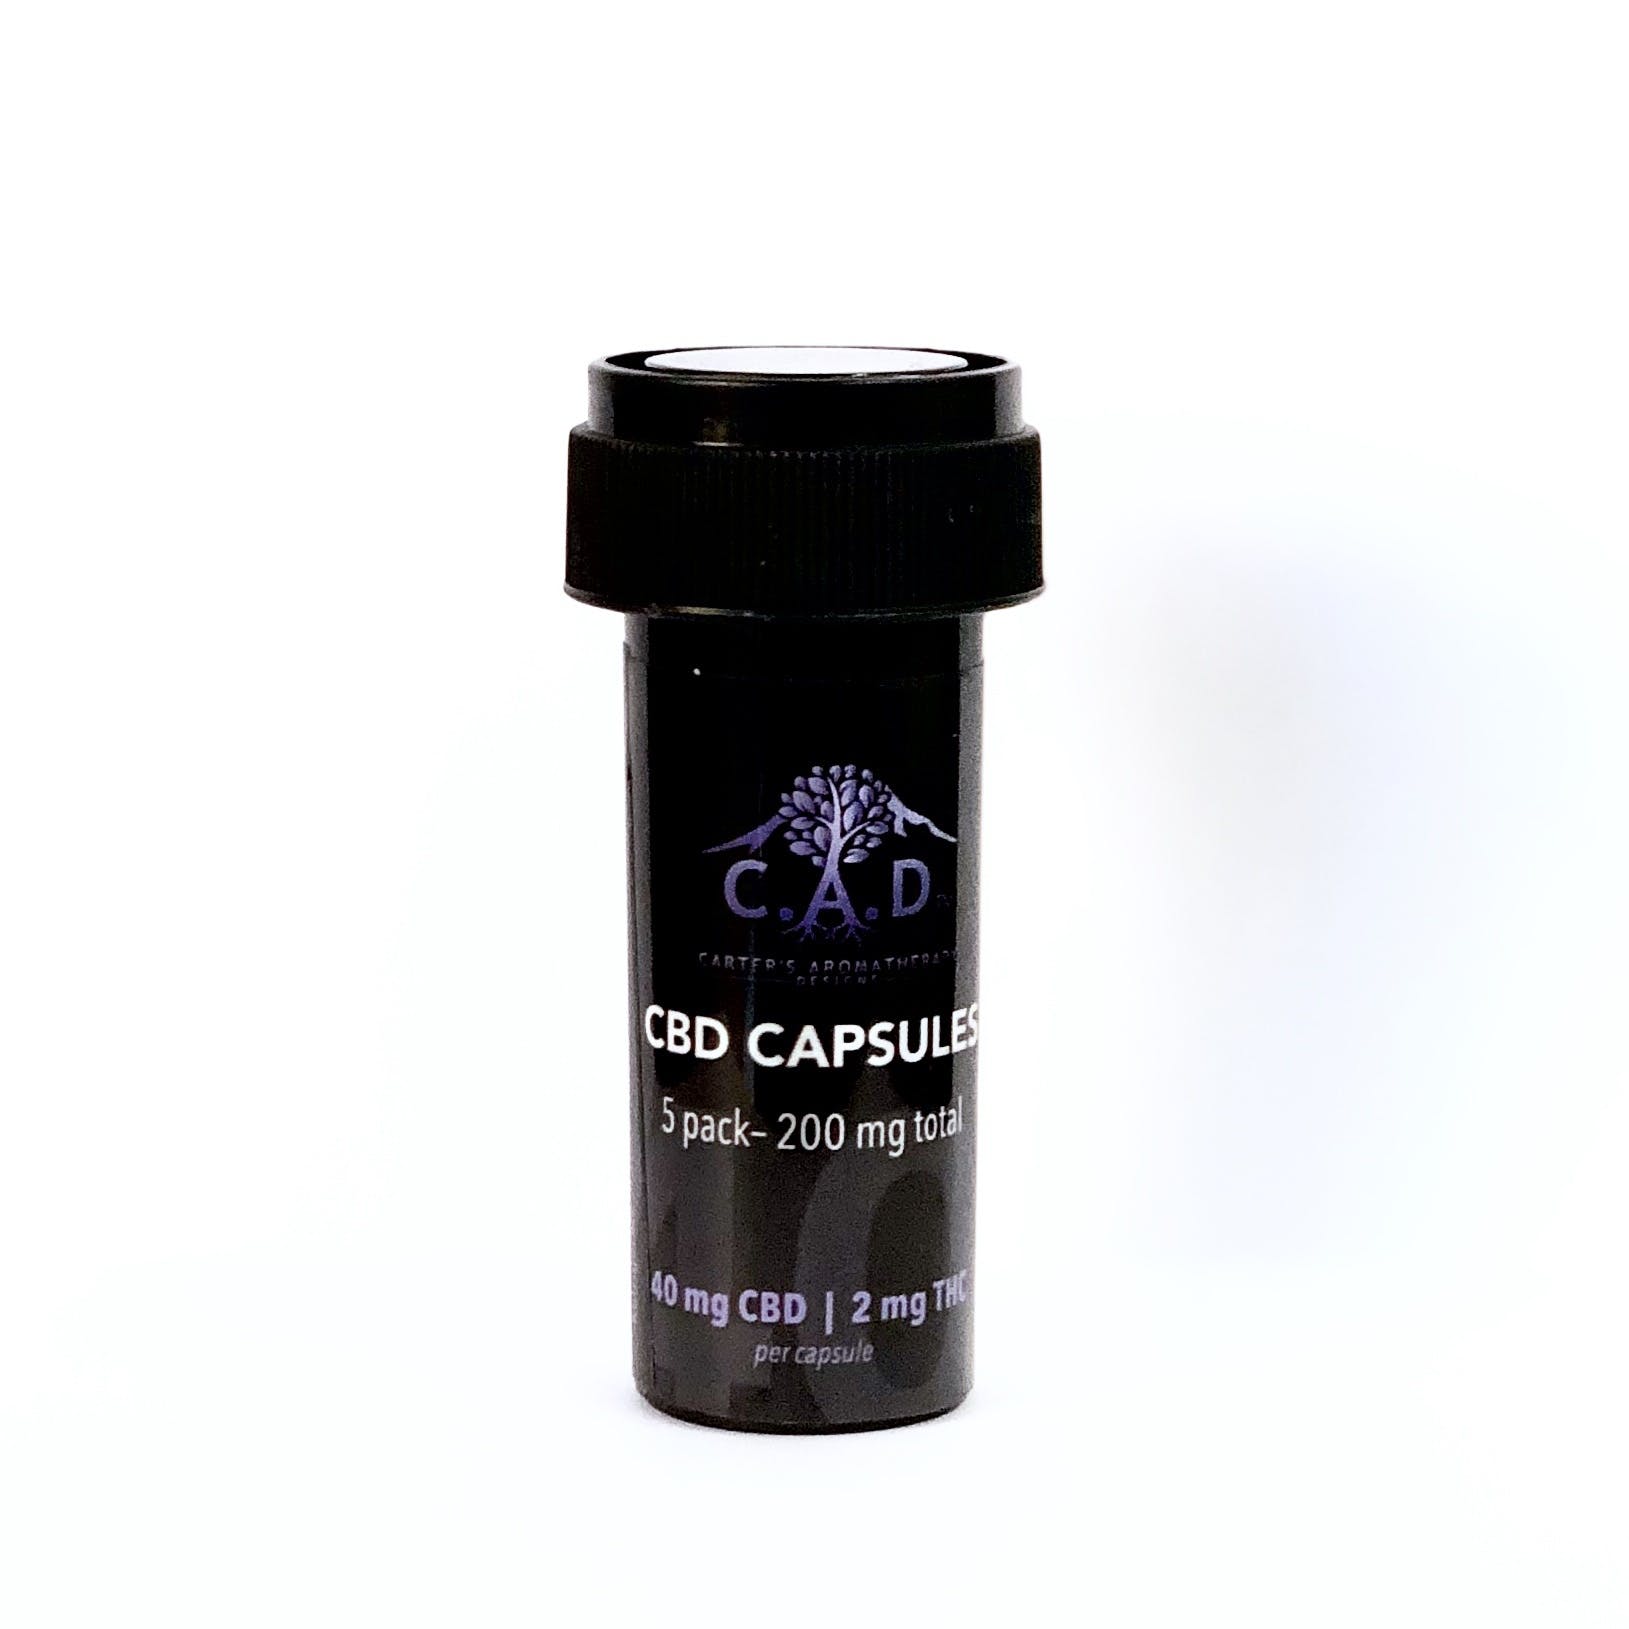 edible-c-a-d-cbd-capsules-200mg-medicinalrecreational